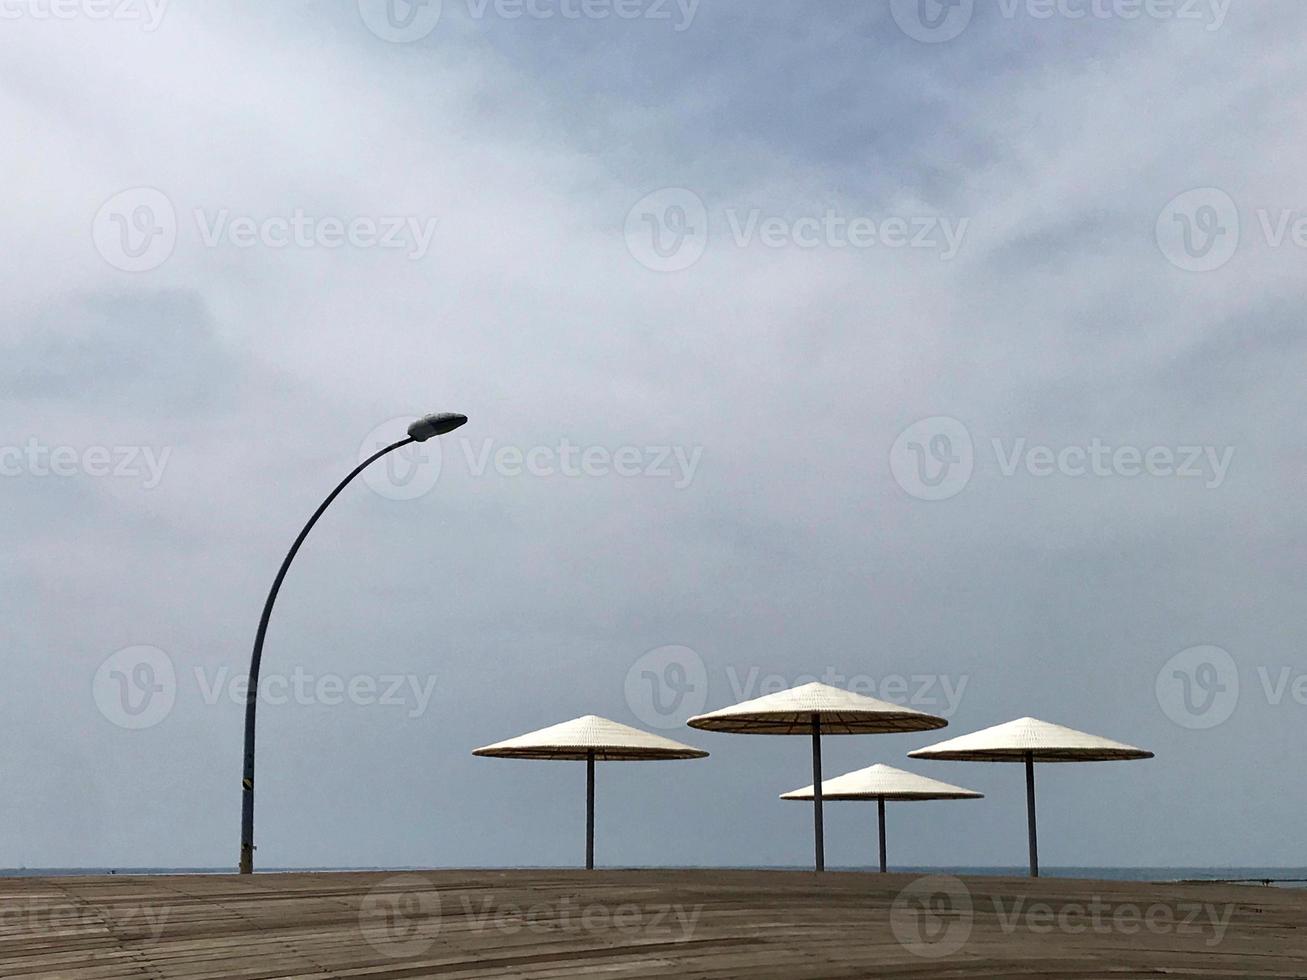 stijlvolle ligstoel in geel zand om te zonnen op het strand foto